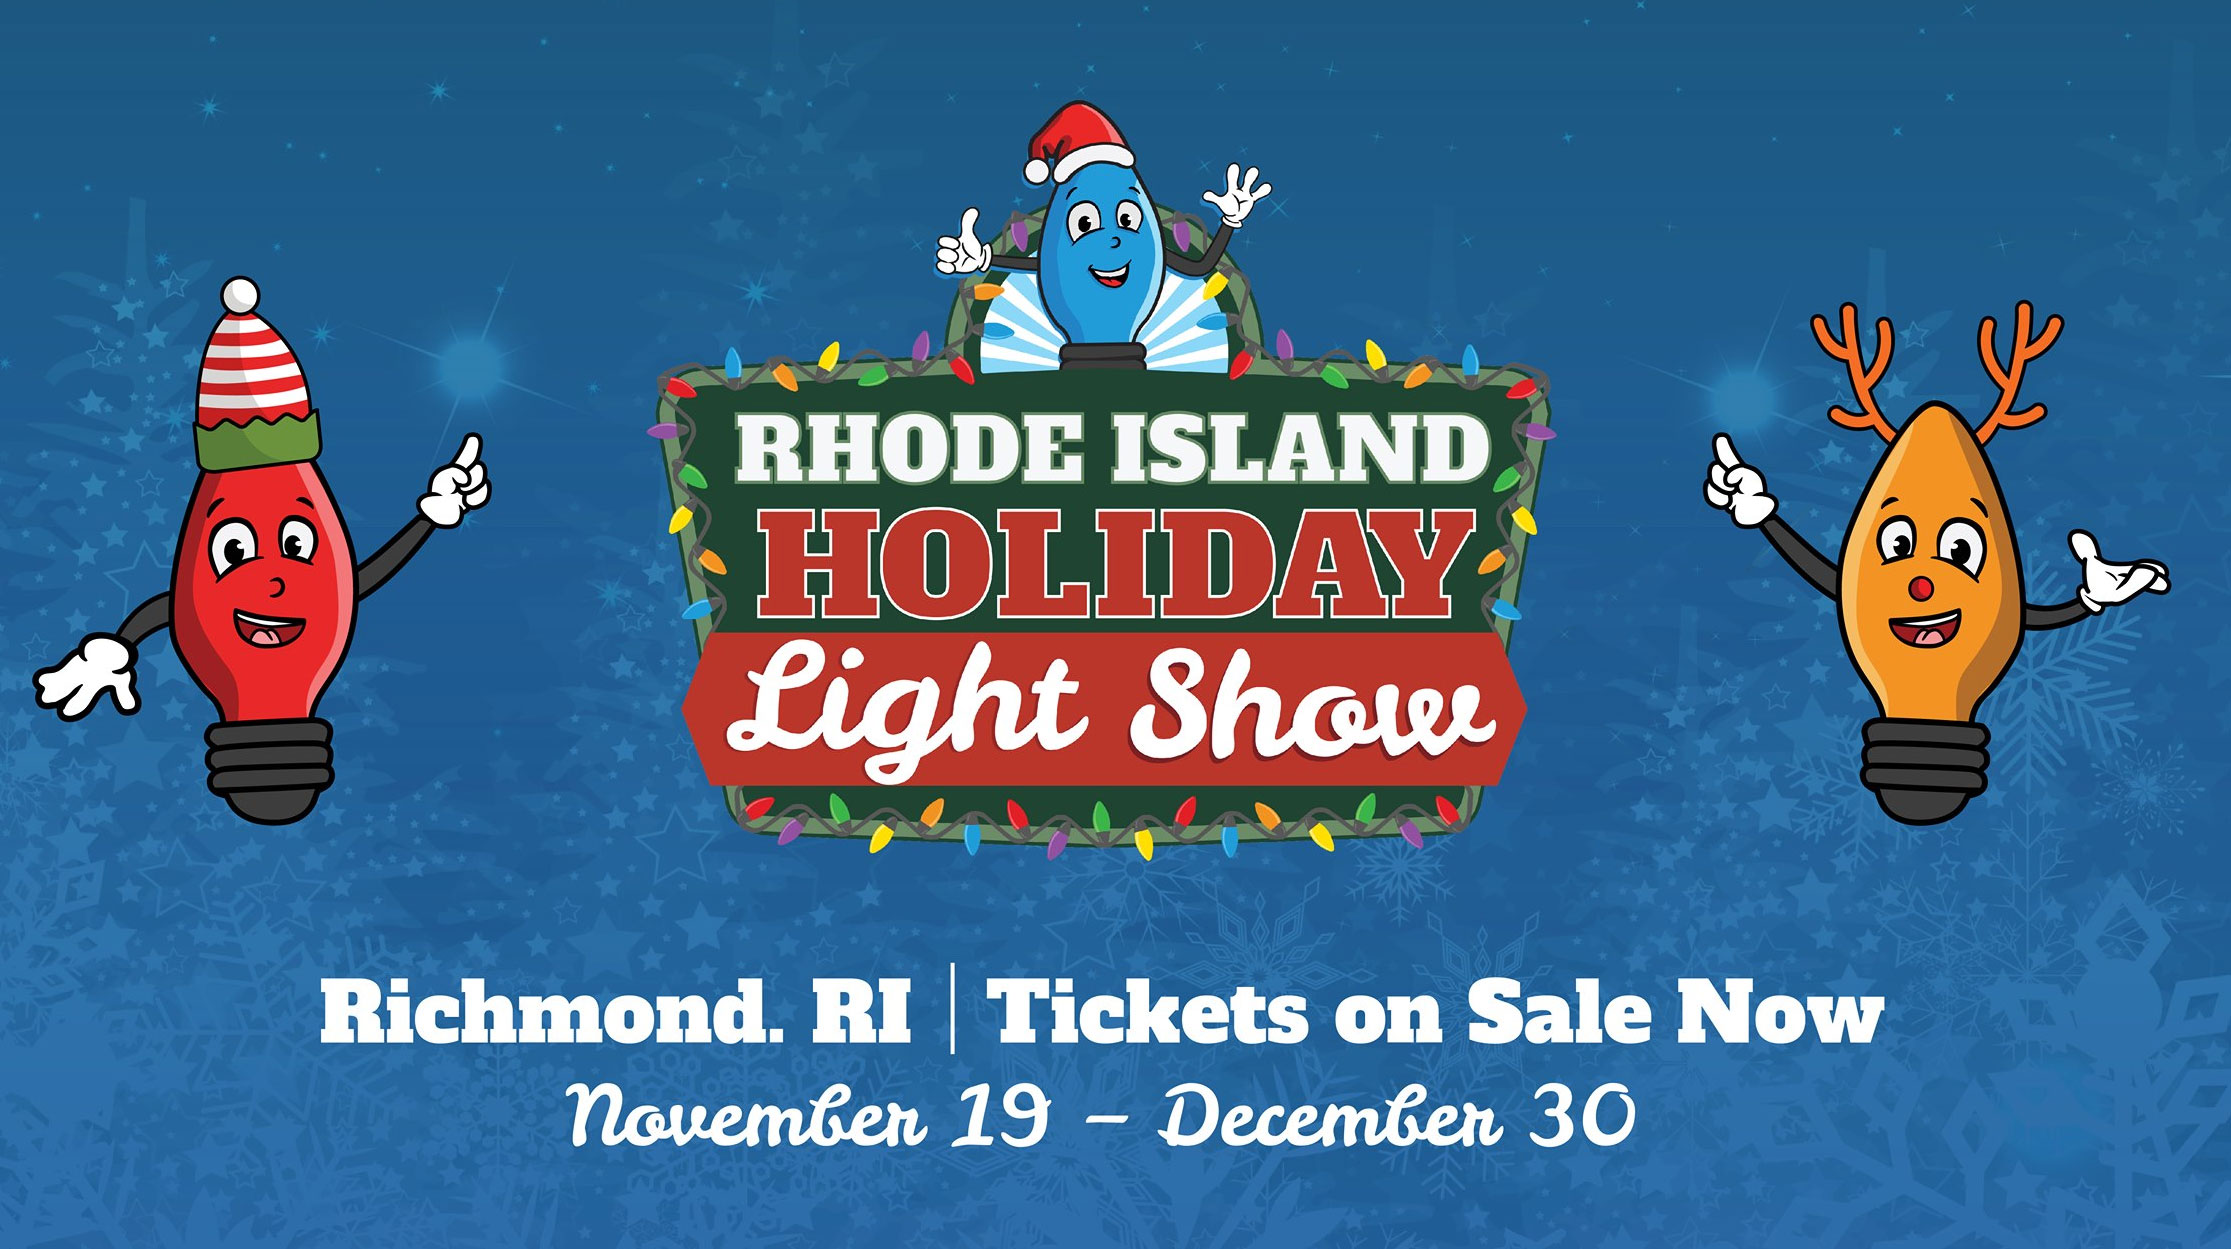 The Rhode Island Holiday Light Show